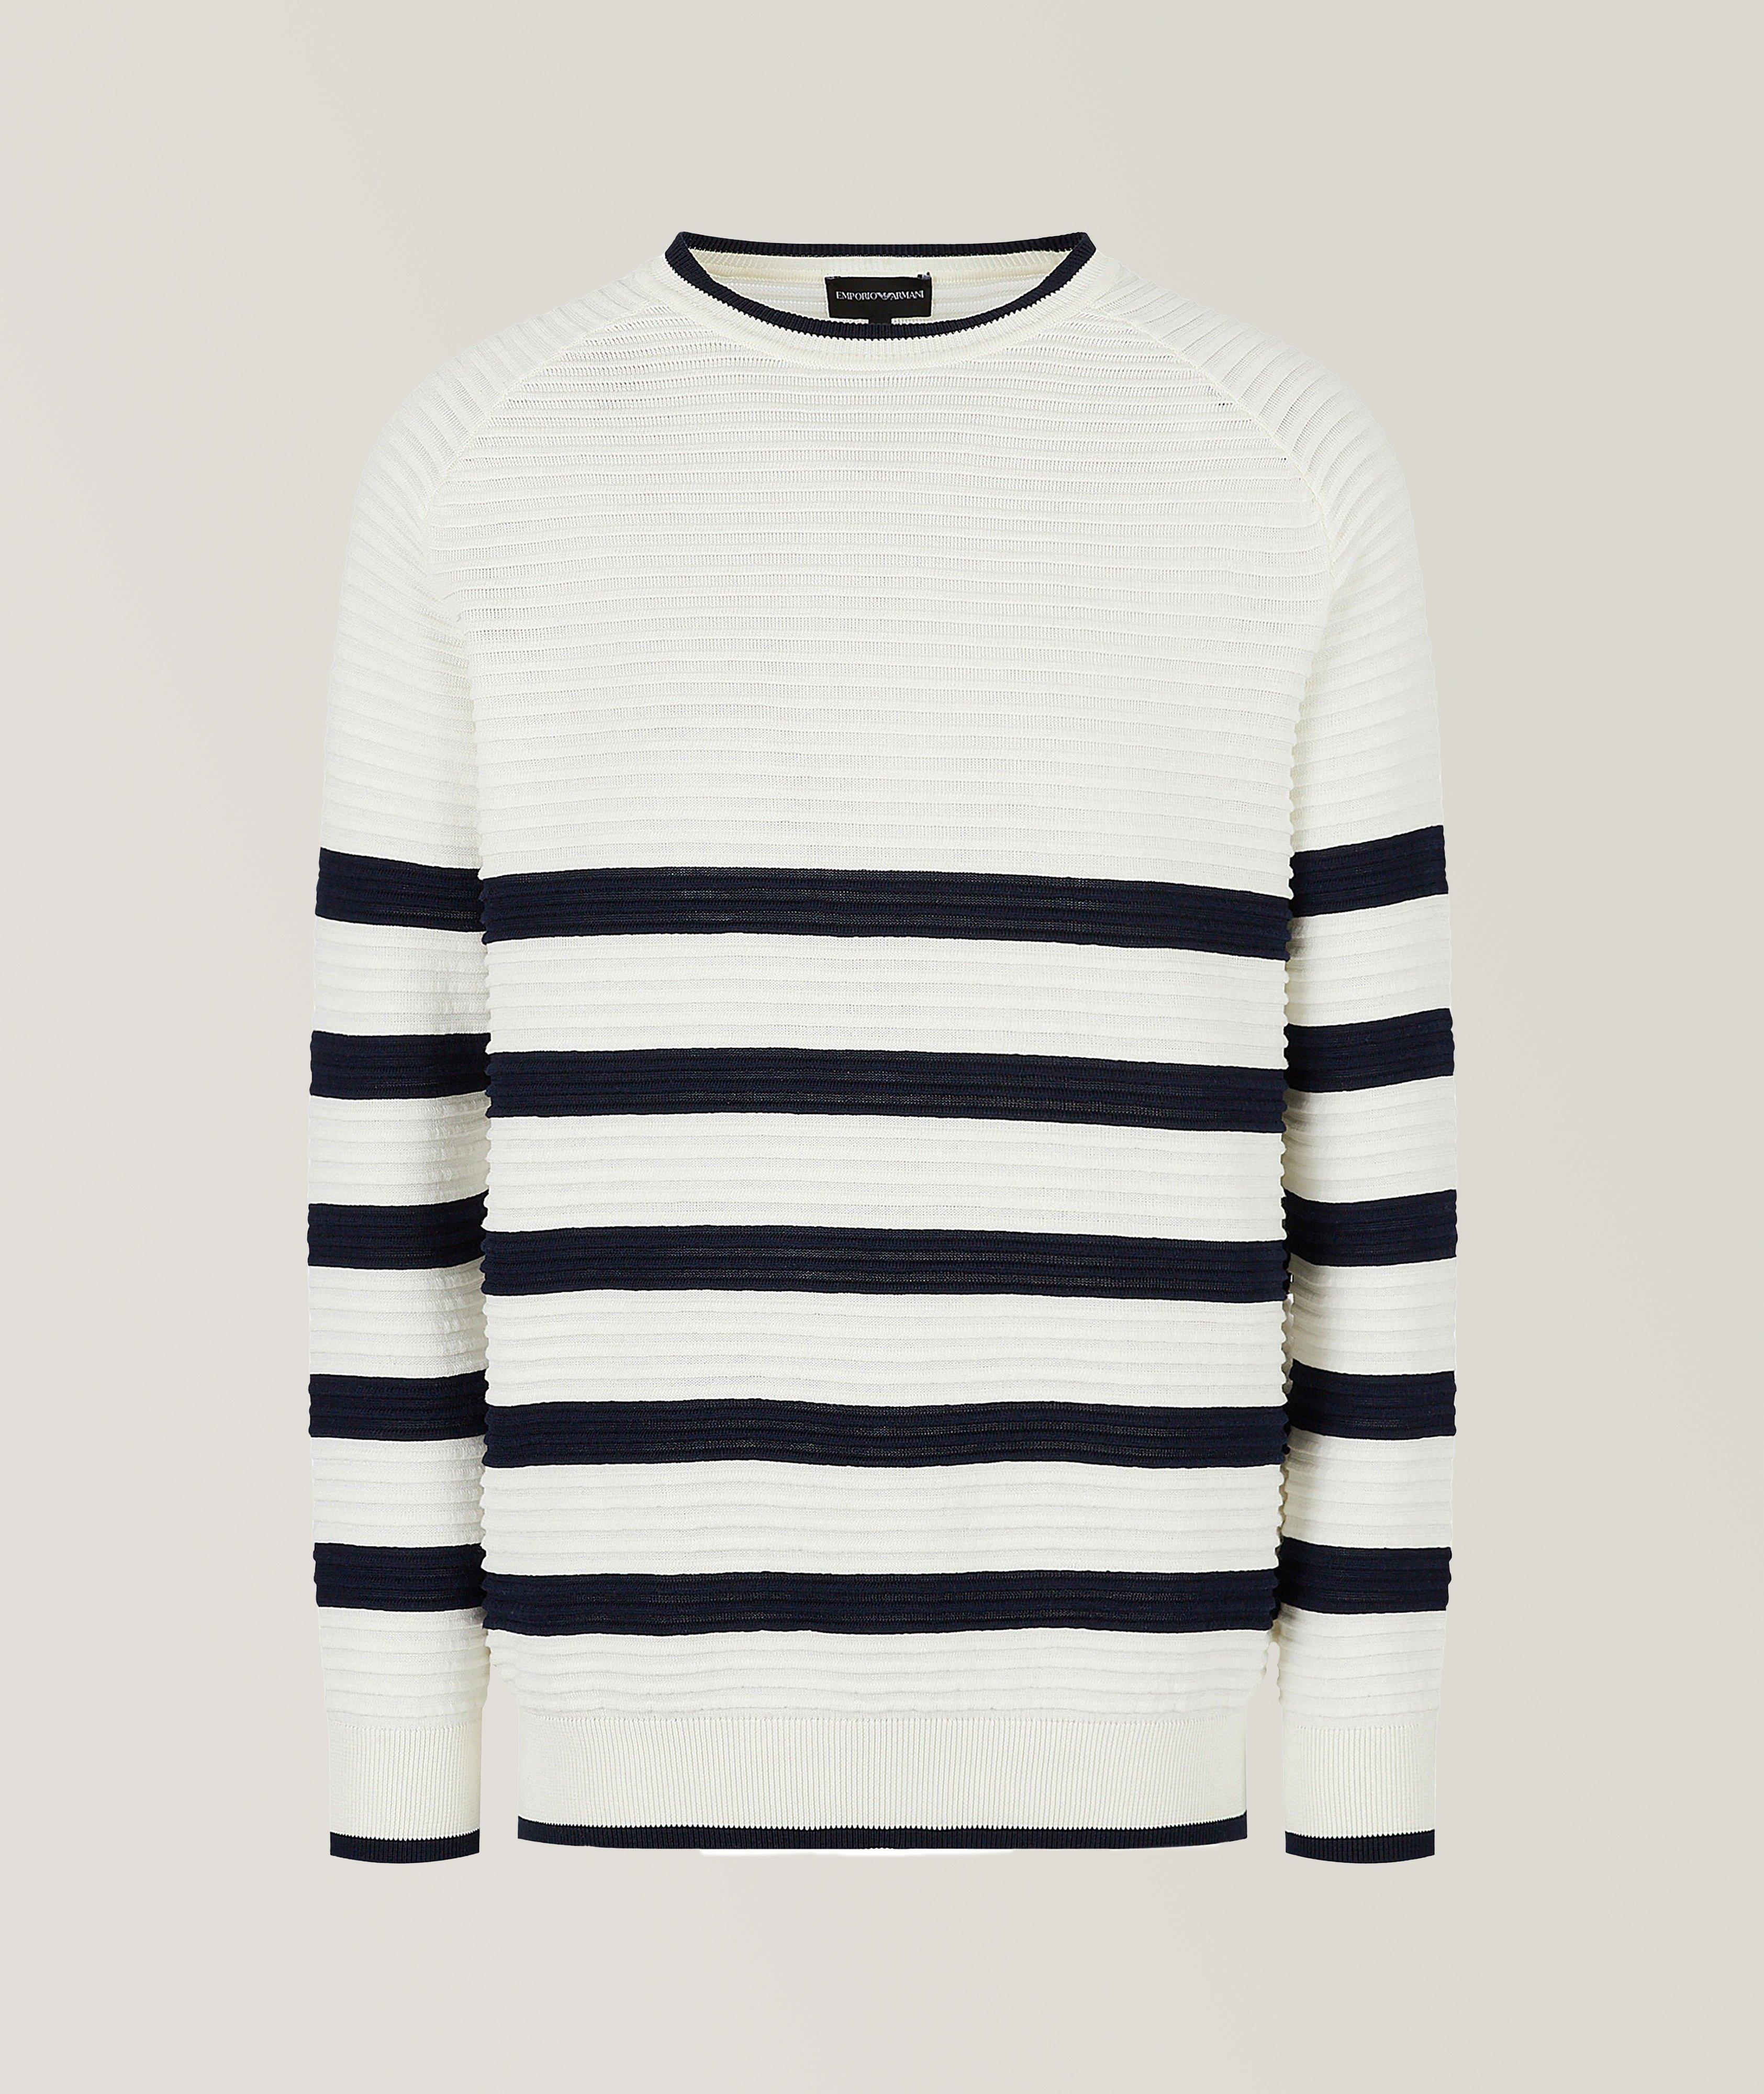 Striped Ottoman Cotton Sweater image 0